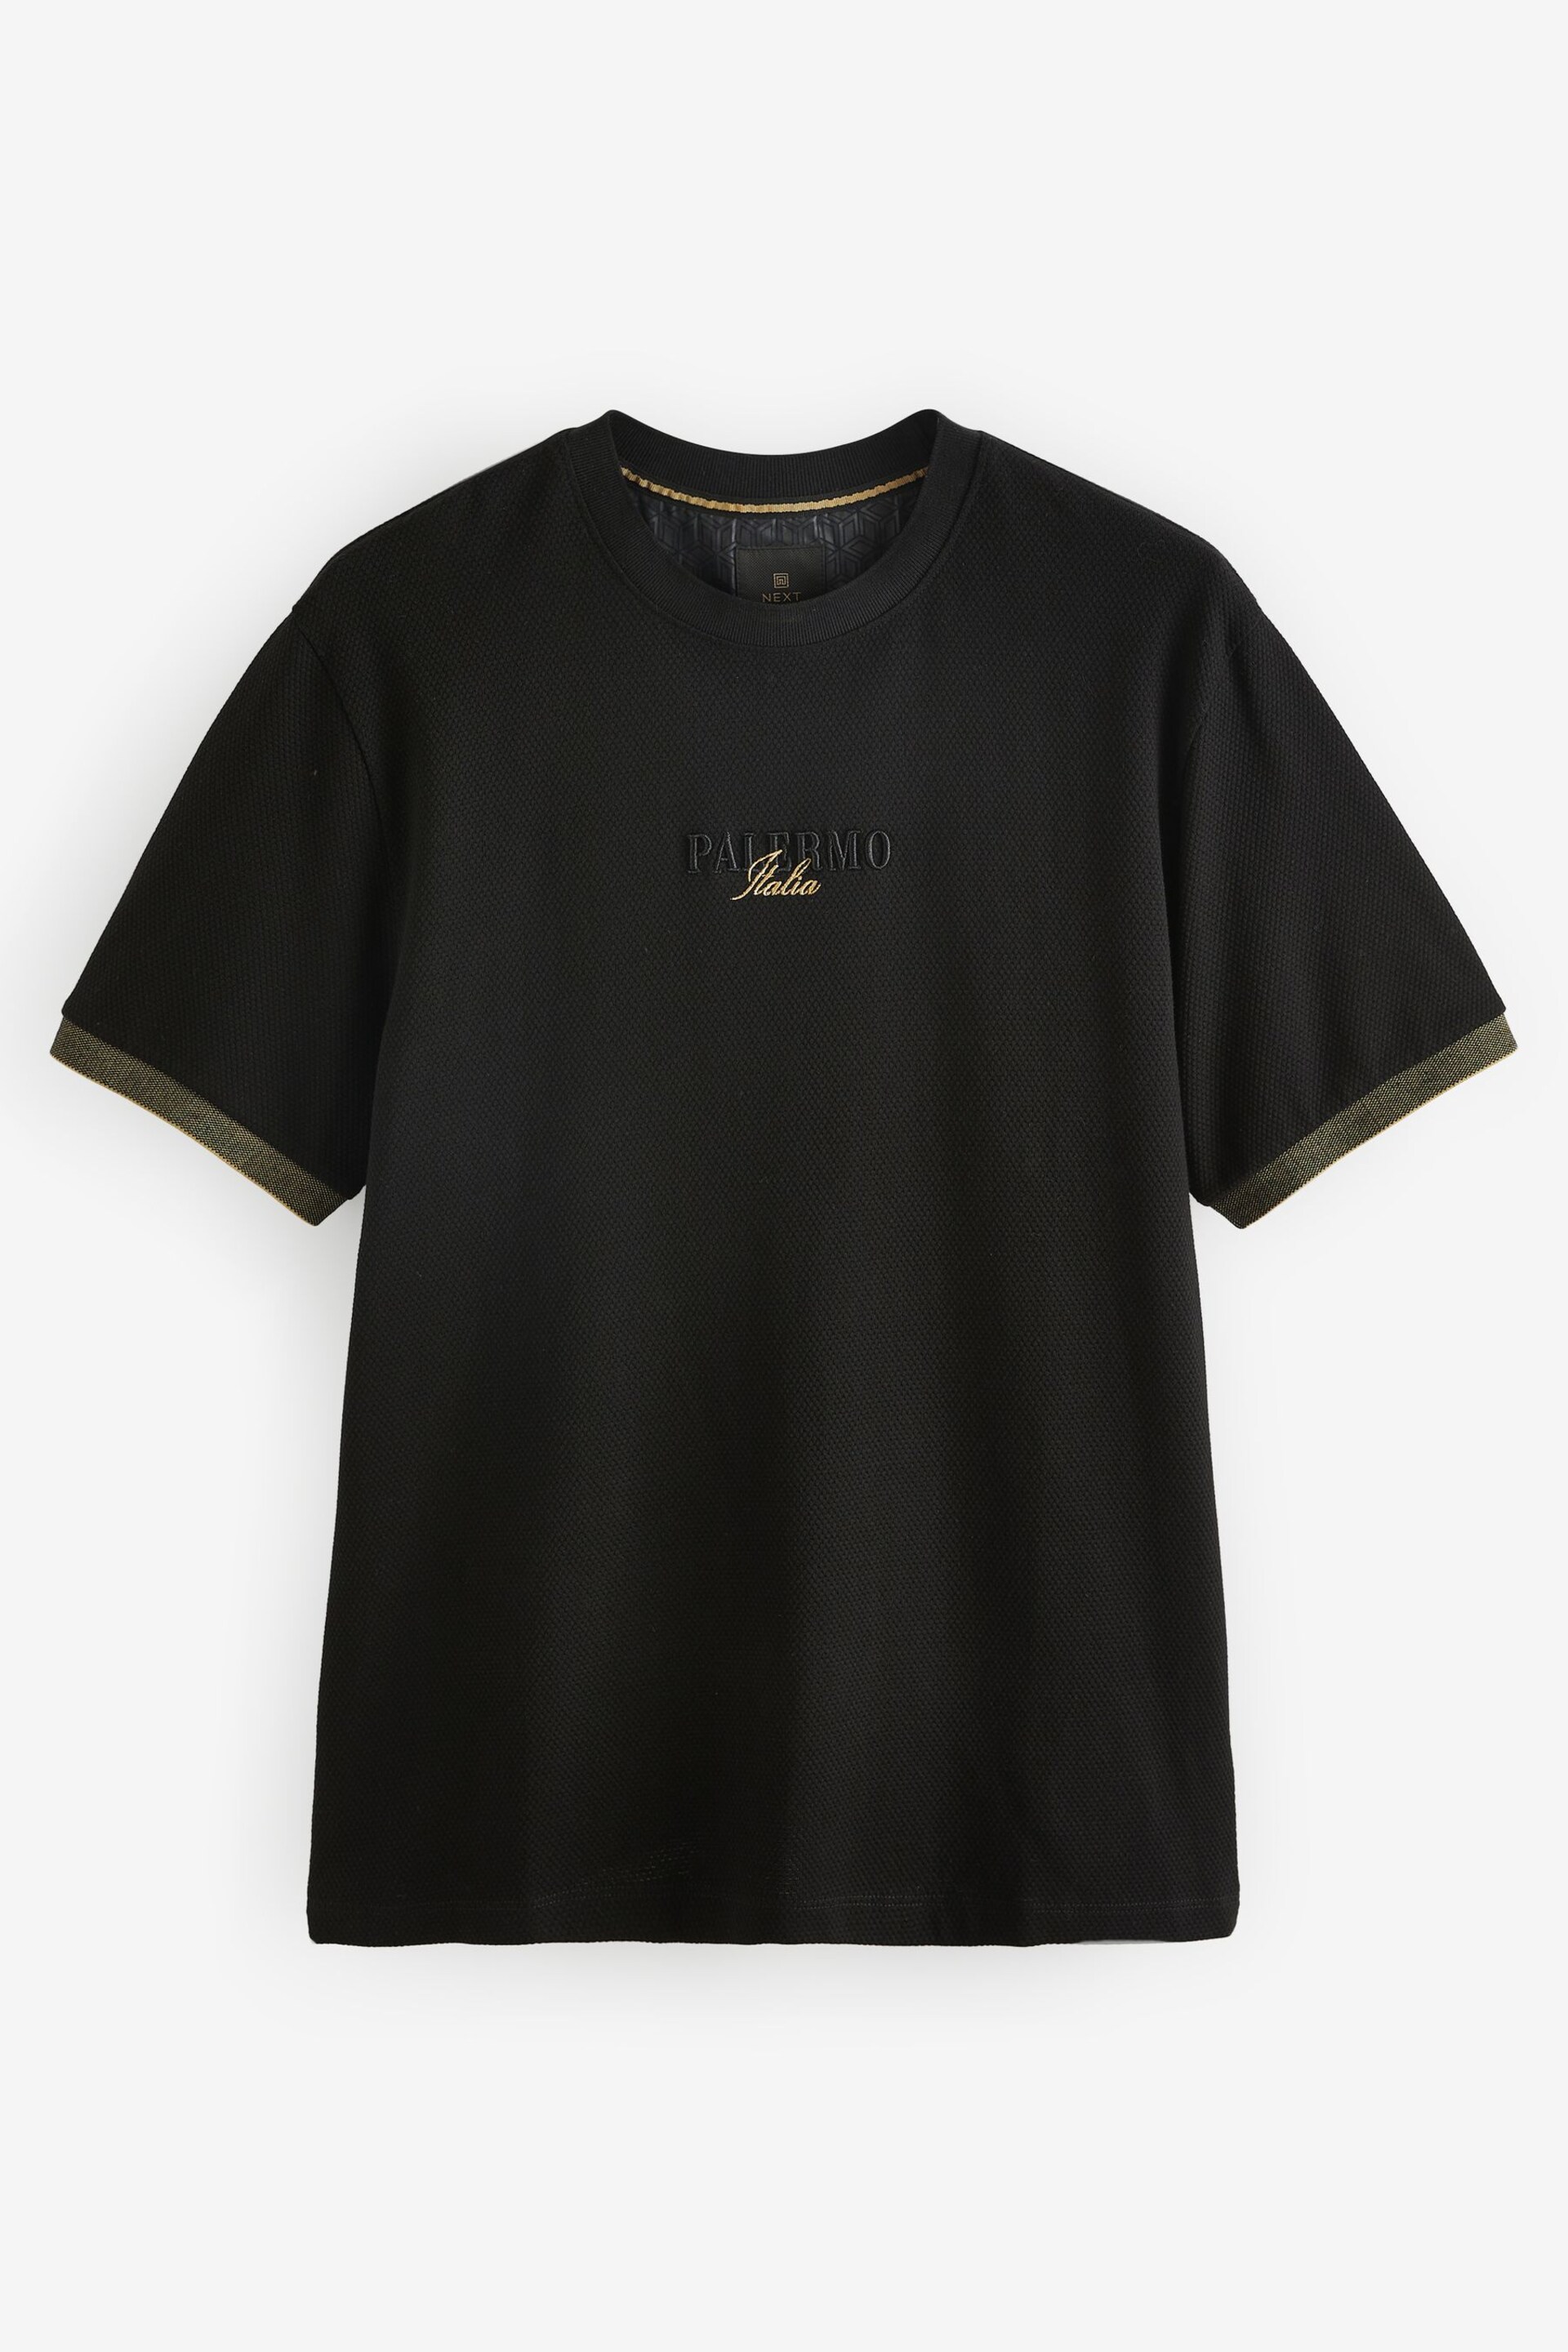 Black Black Textured T-Shirt - Image 7 of 9